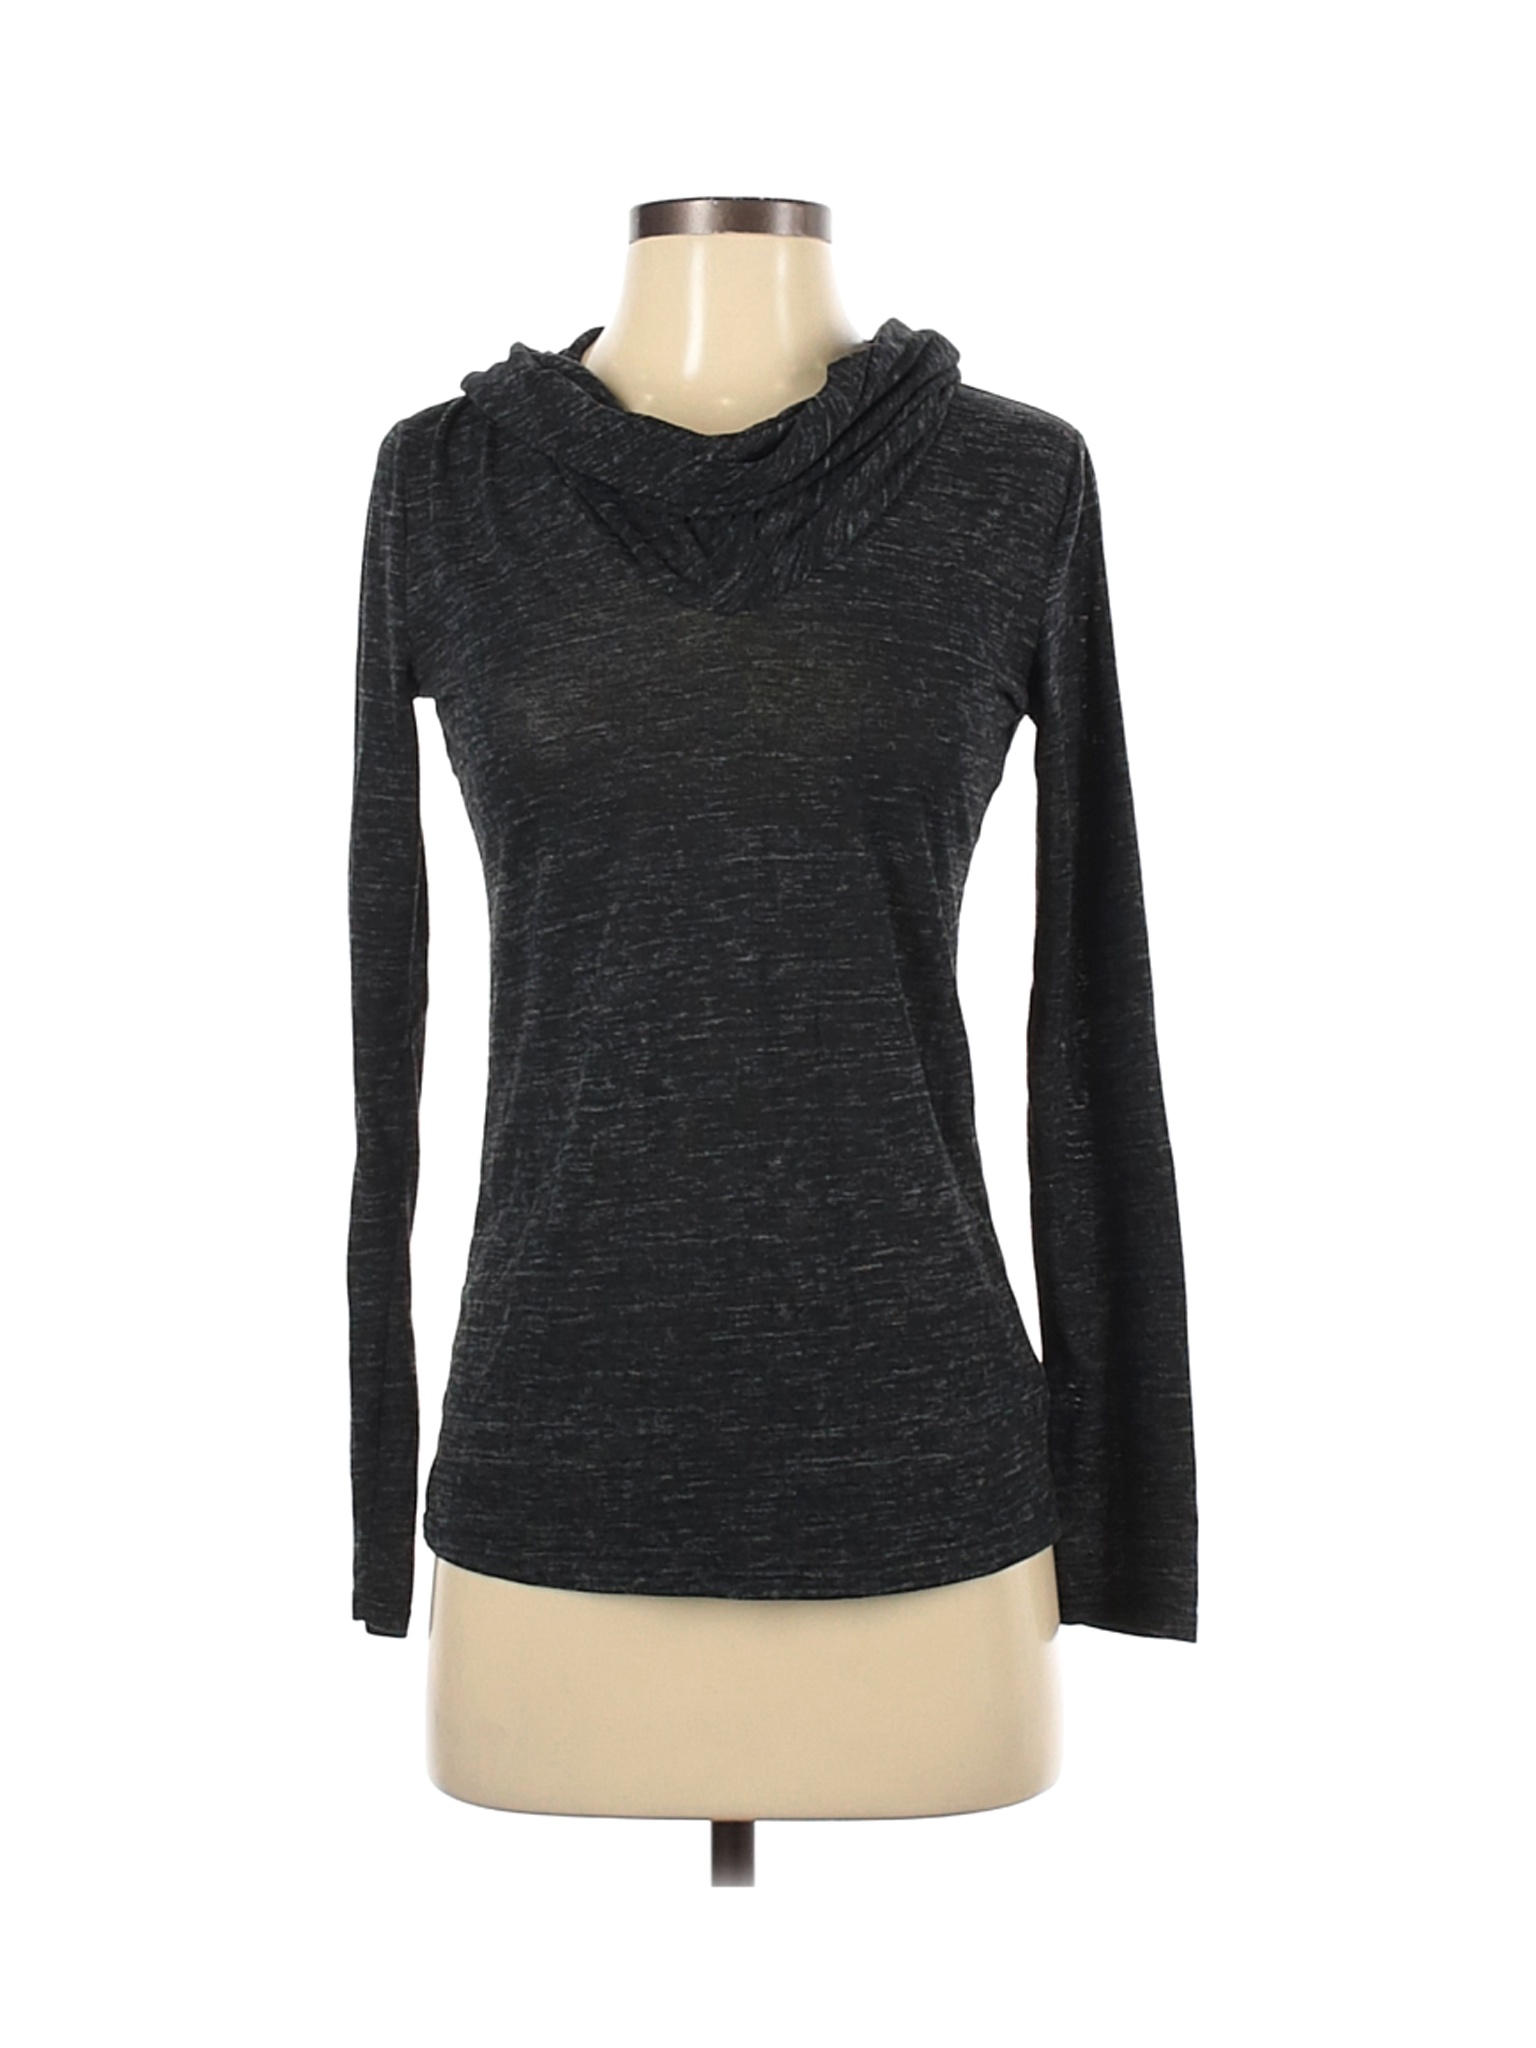 Gap Women Gray Long Sleeve Top XS | eBay